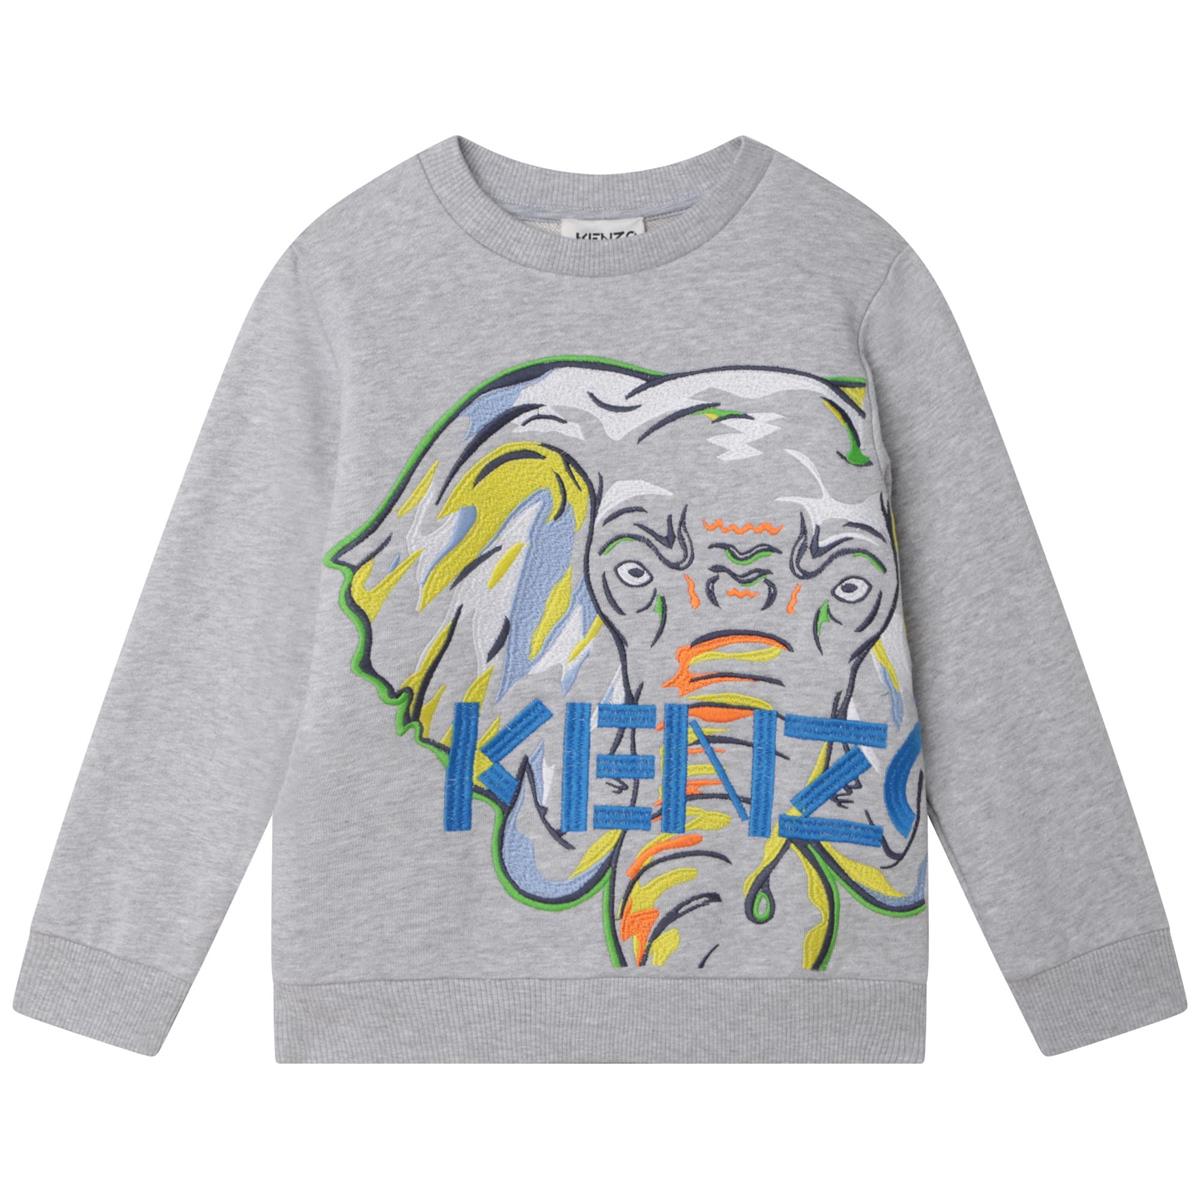 Boys Grey Printed Sweatshirt